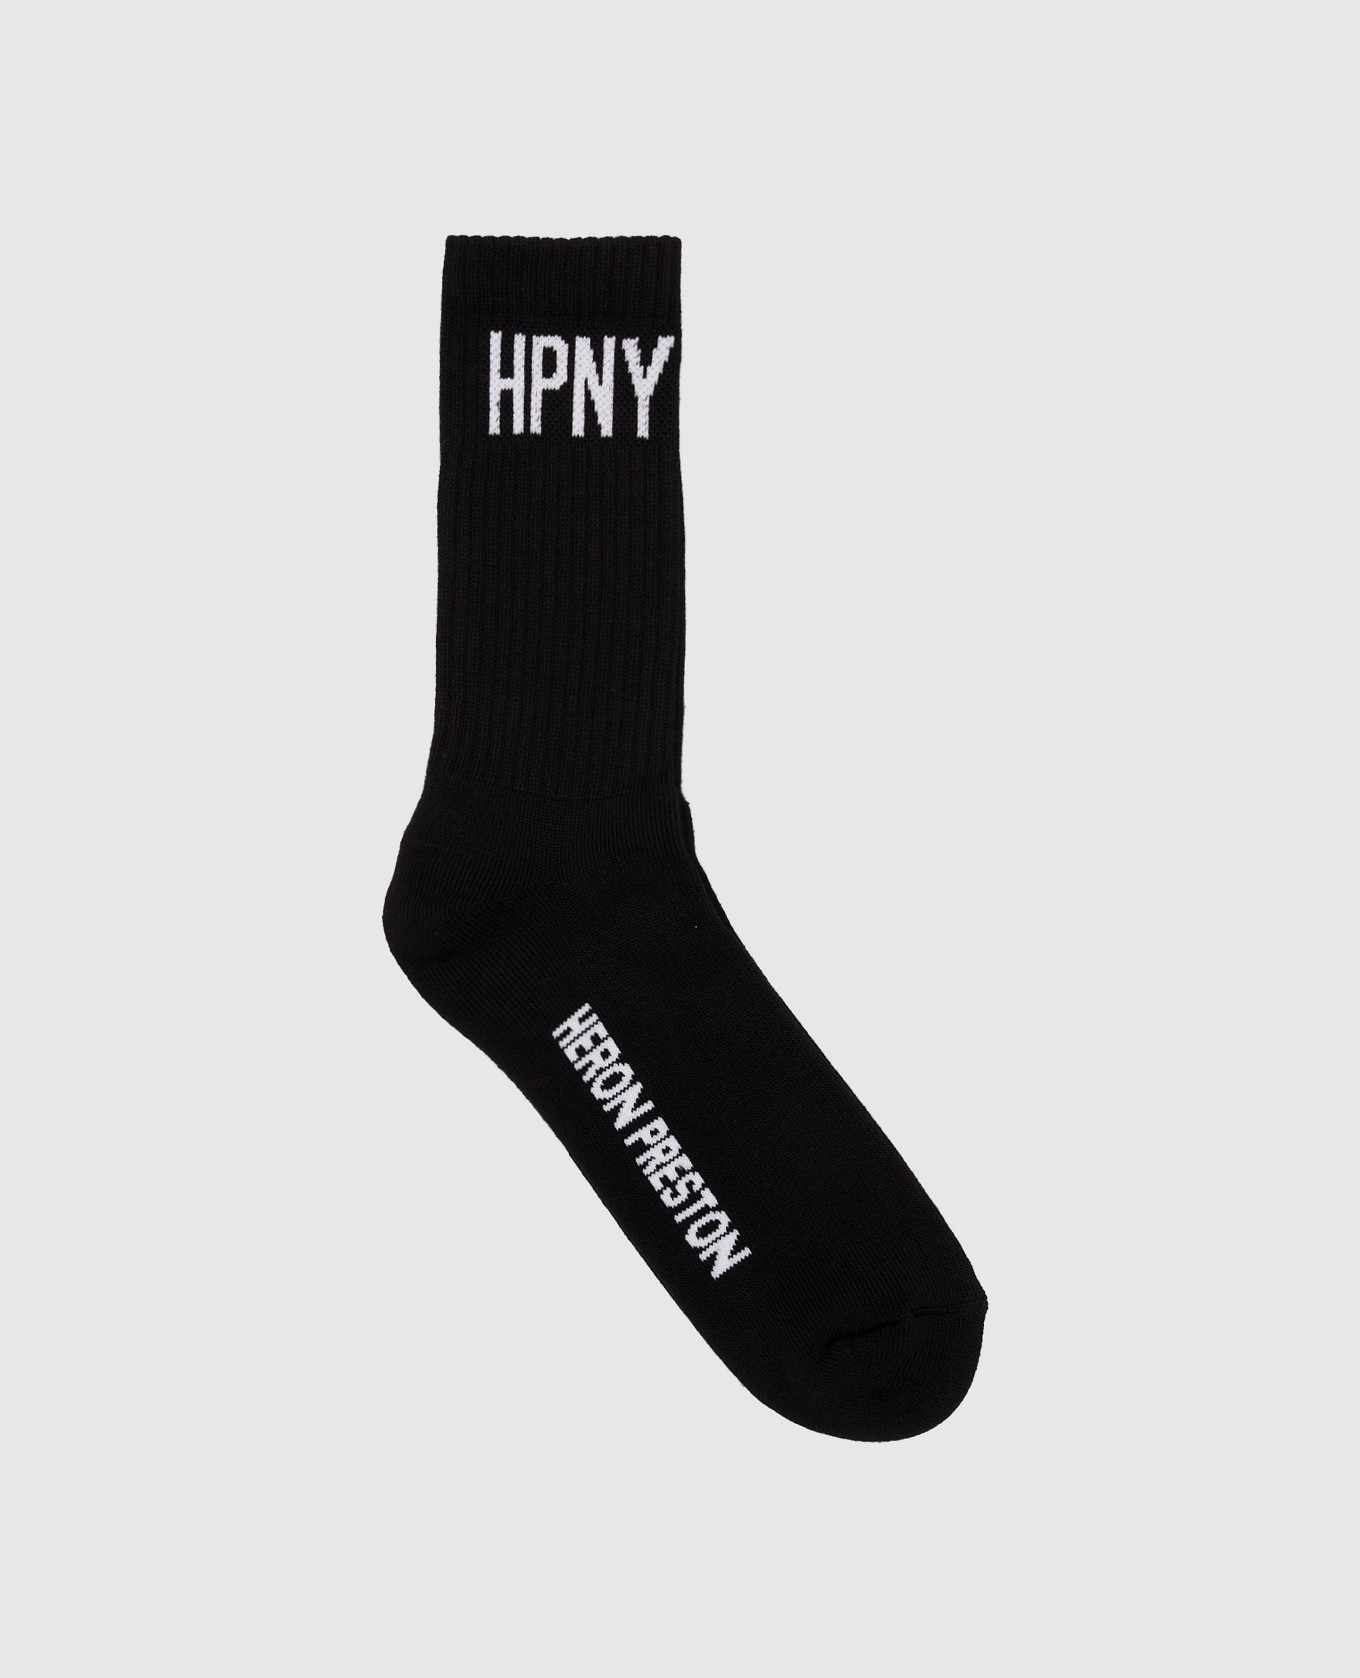 Black socks with a logo pattern